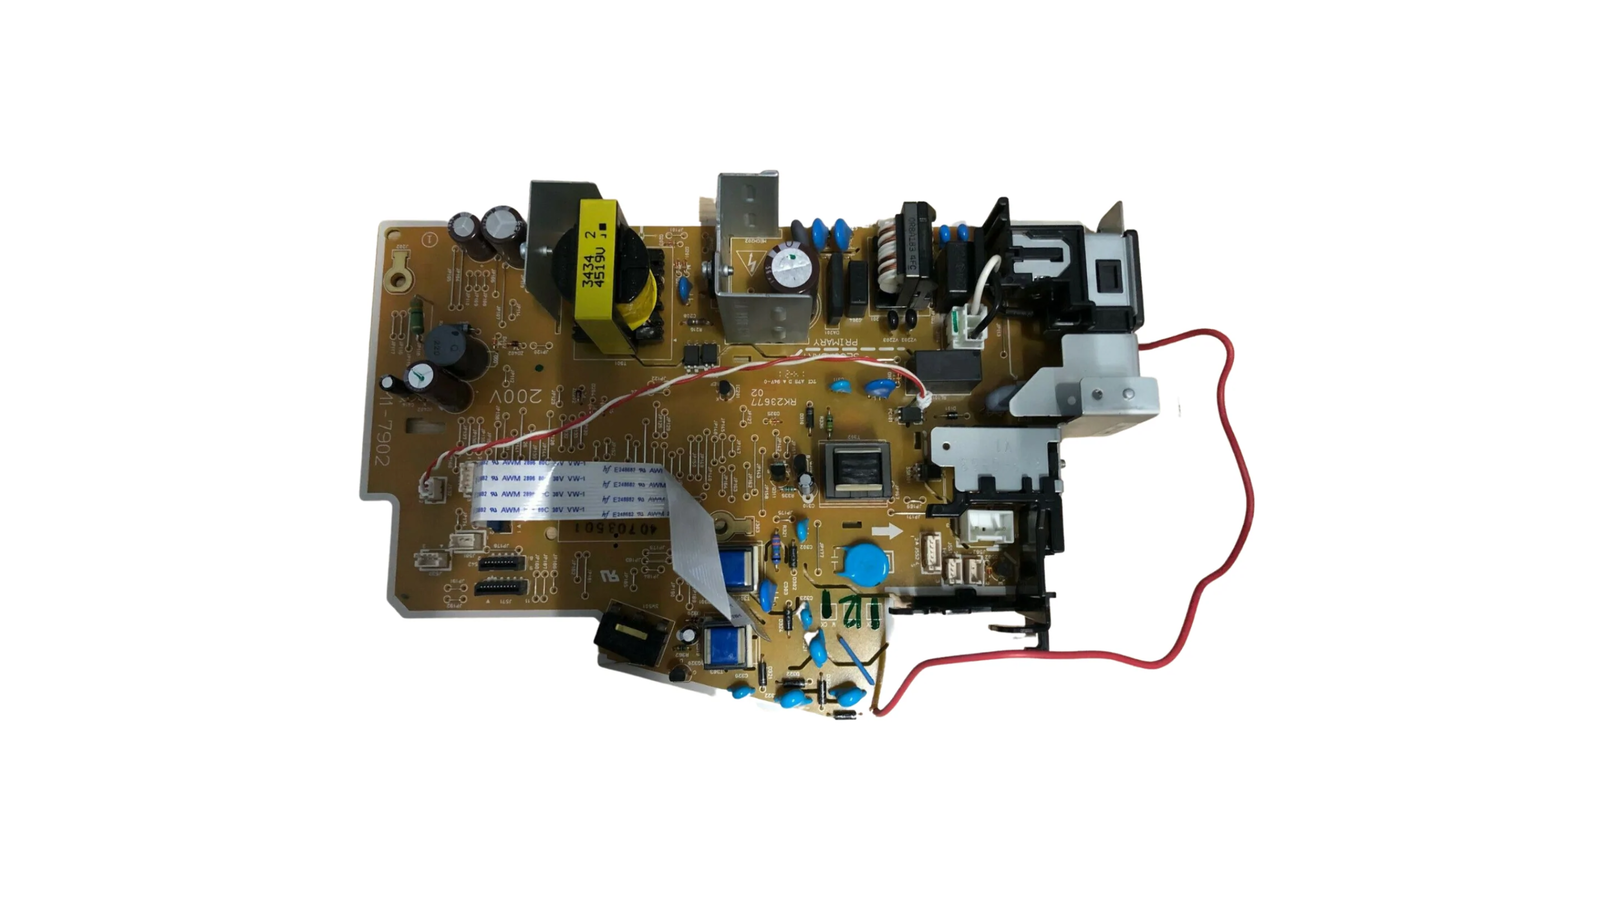 RM1-7902 power supply board for HP LaserJet M1132 MFP